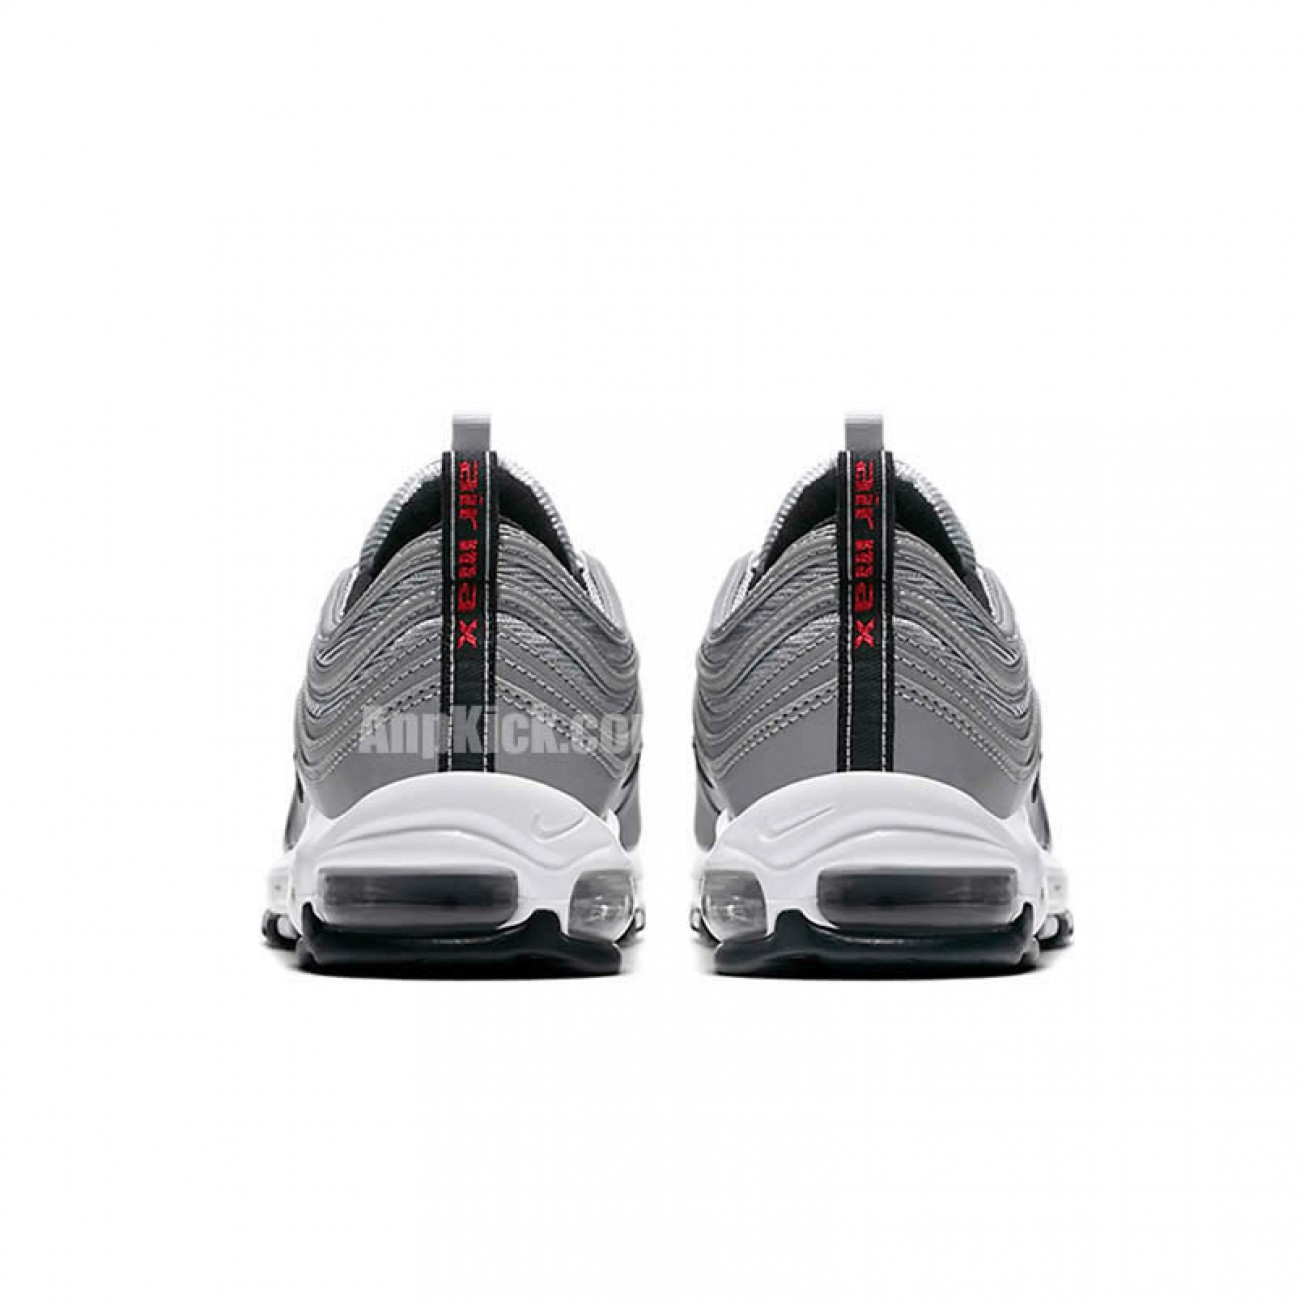 Air Max 97 Premium Reflective Silver Black Bullet Shoes 312834-007